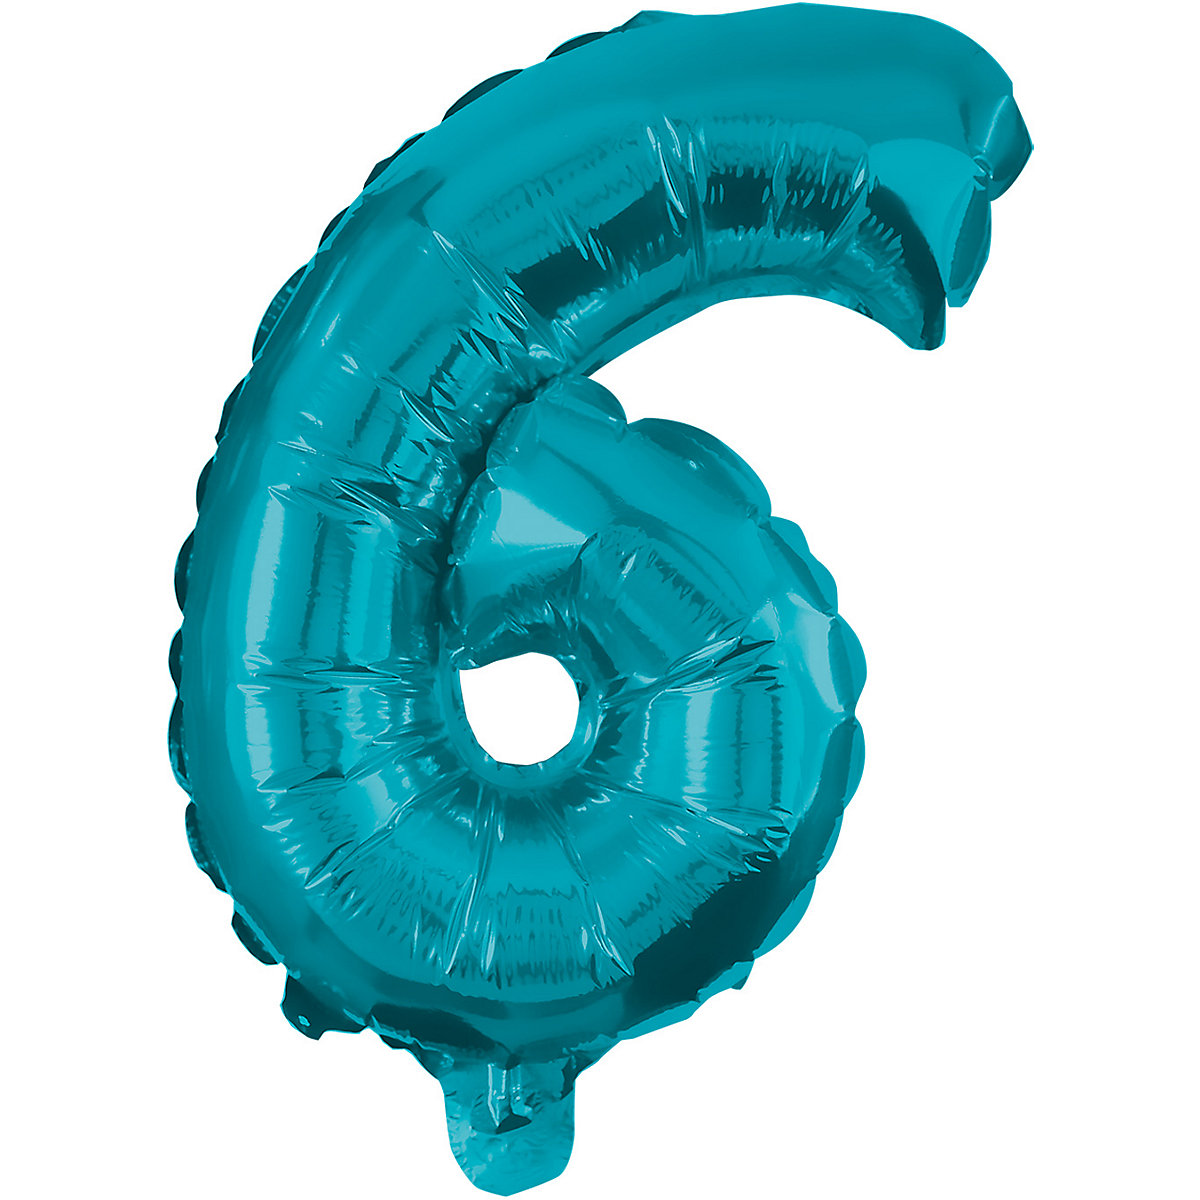 Procos Folienballon Zahl 6 türkis 32 cm inkl. Pustehalm